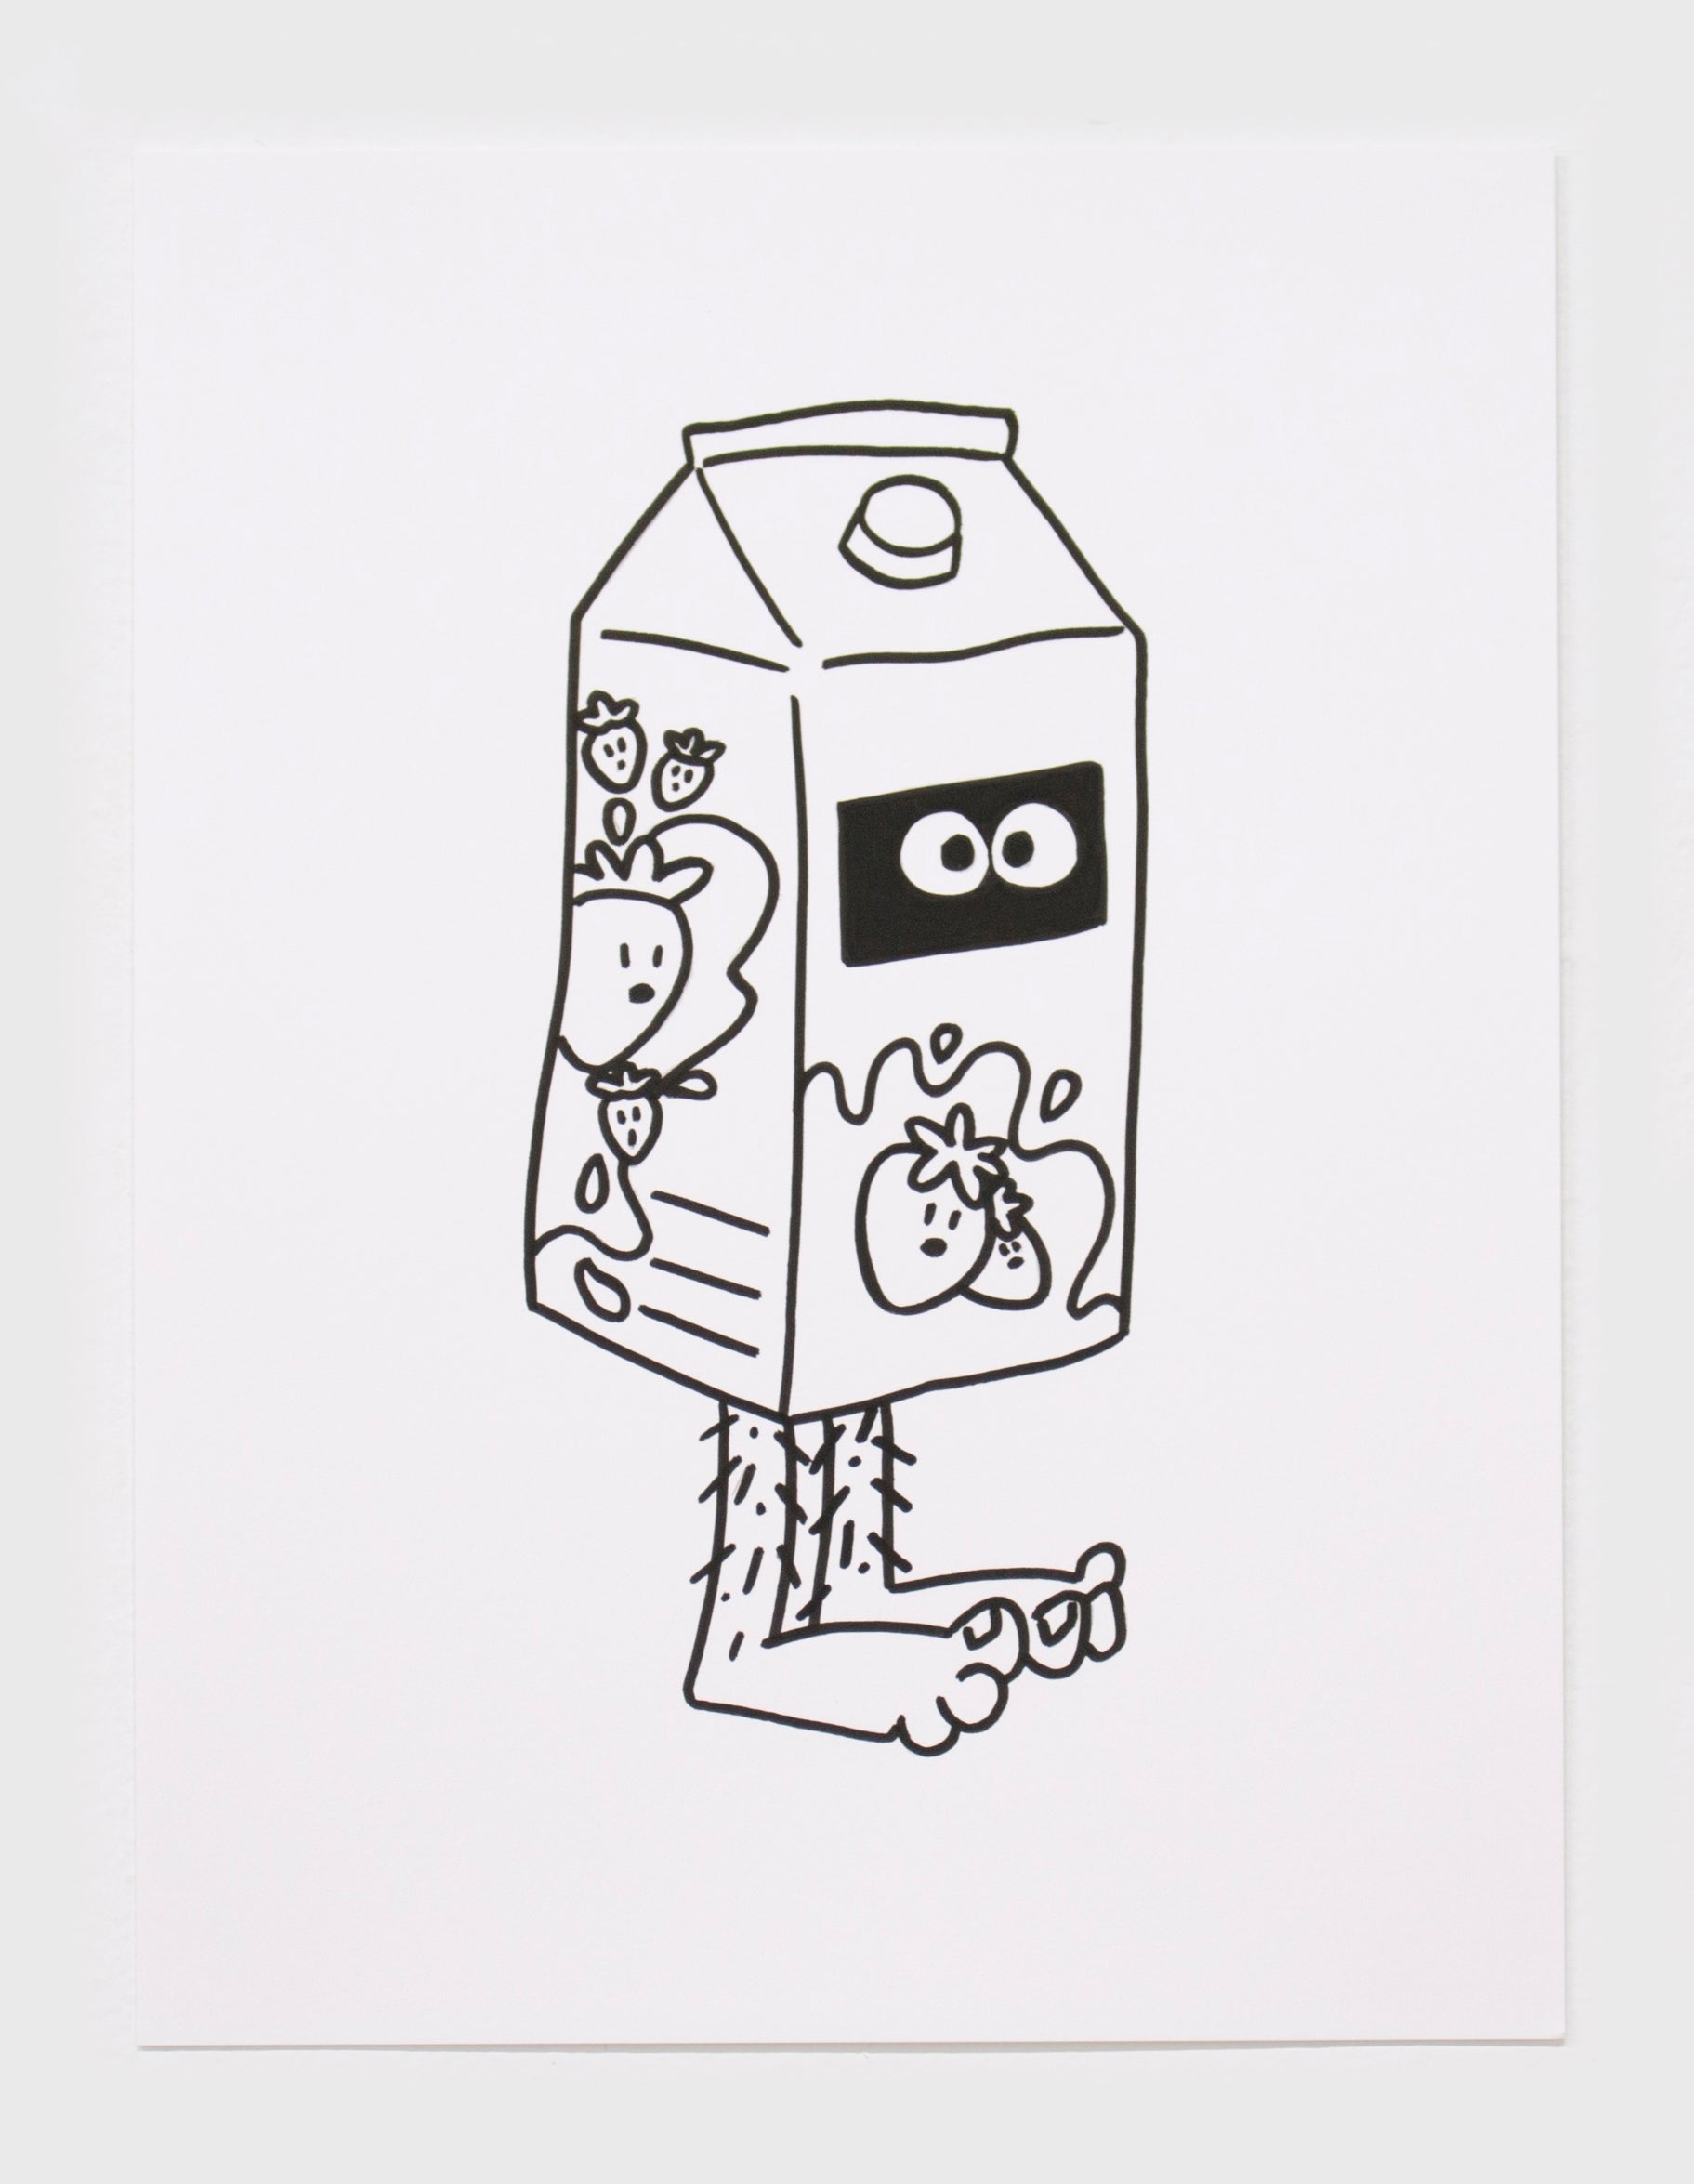 "Milkman #3" by Griffin Goodman